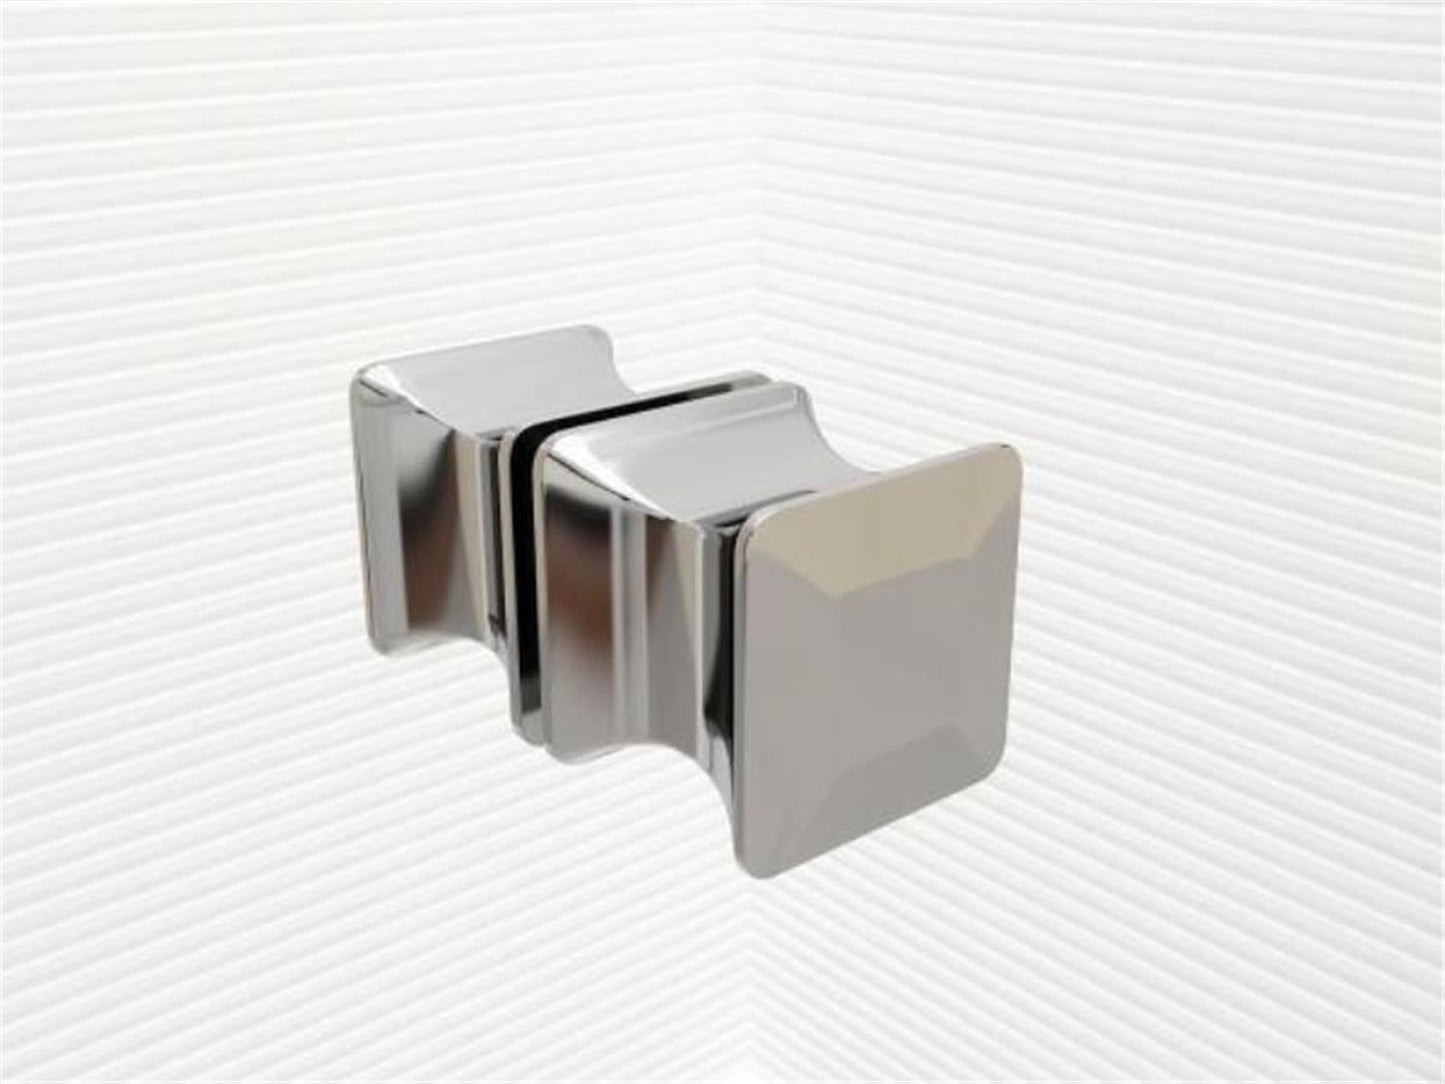 GlasHomeCenter - Cabina de ducha en forma de U "Asuka" (120x75x195cm) - 8mm - cabina de ducha de esquina - mampara de ducha - sin plato de ducha